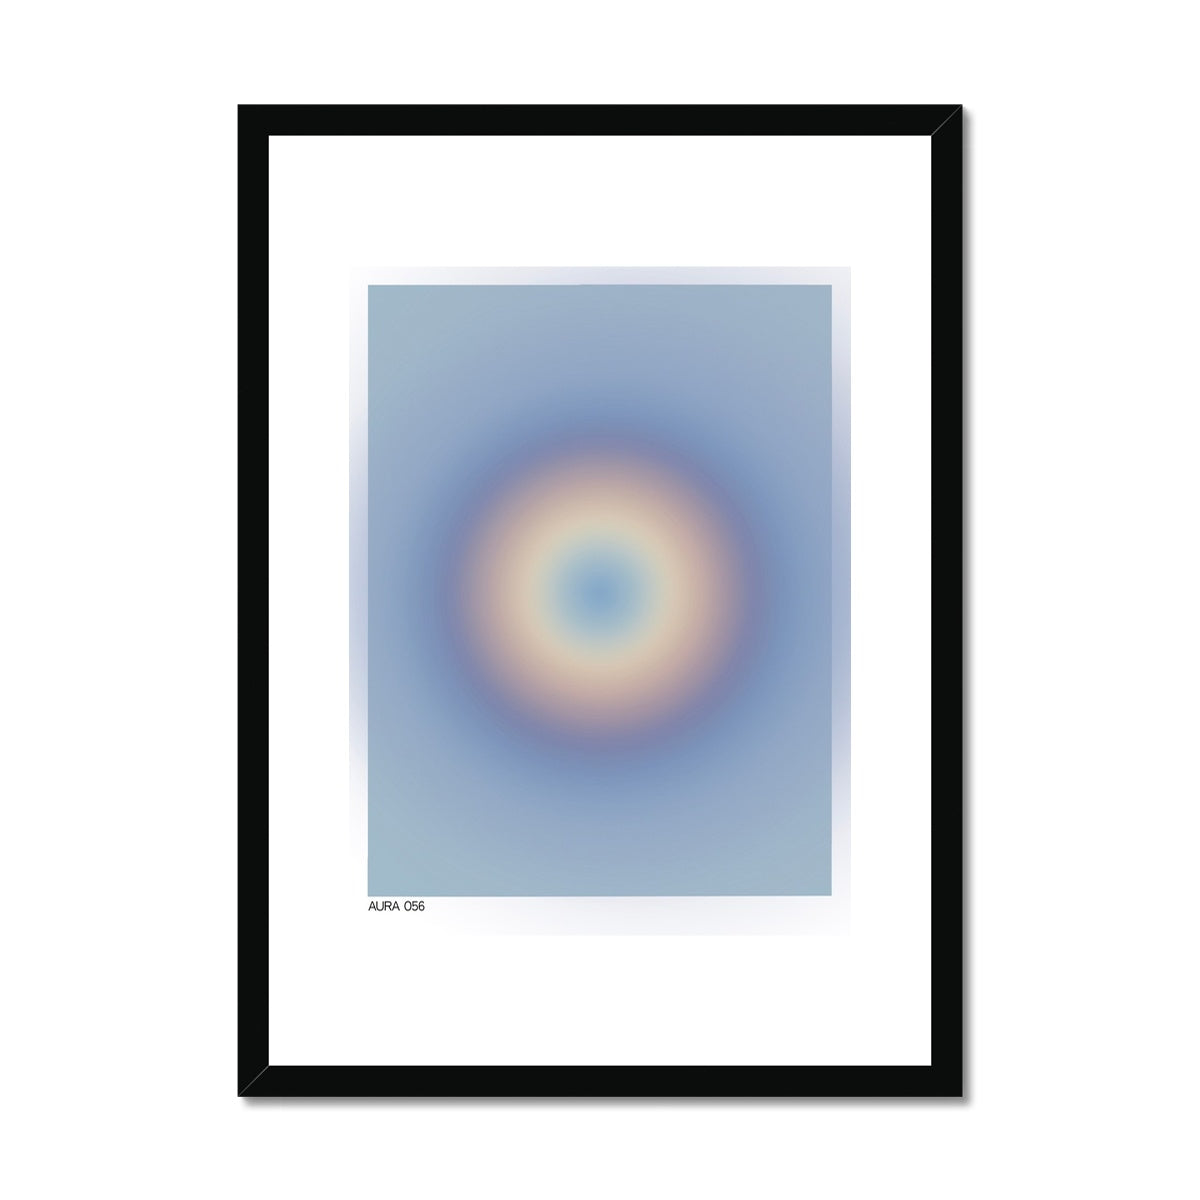 aura 056 Framed & Mounted Print